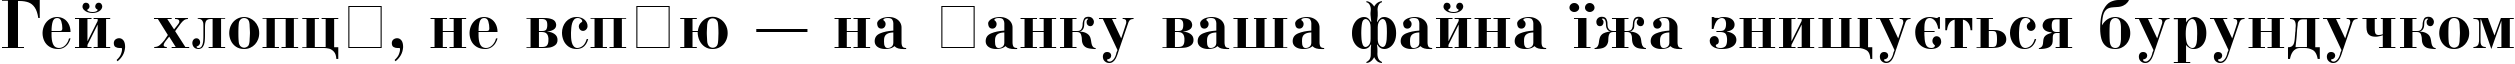 Пример написания шрифтом UsualNew Bold текста на украинском